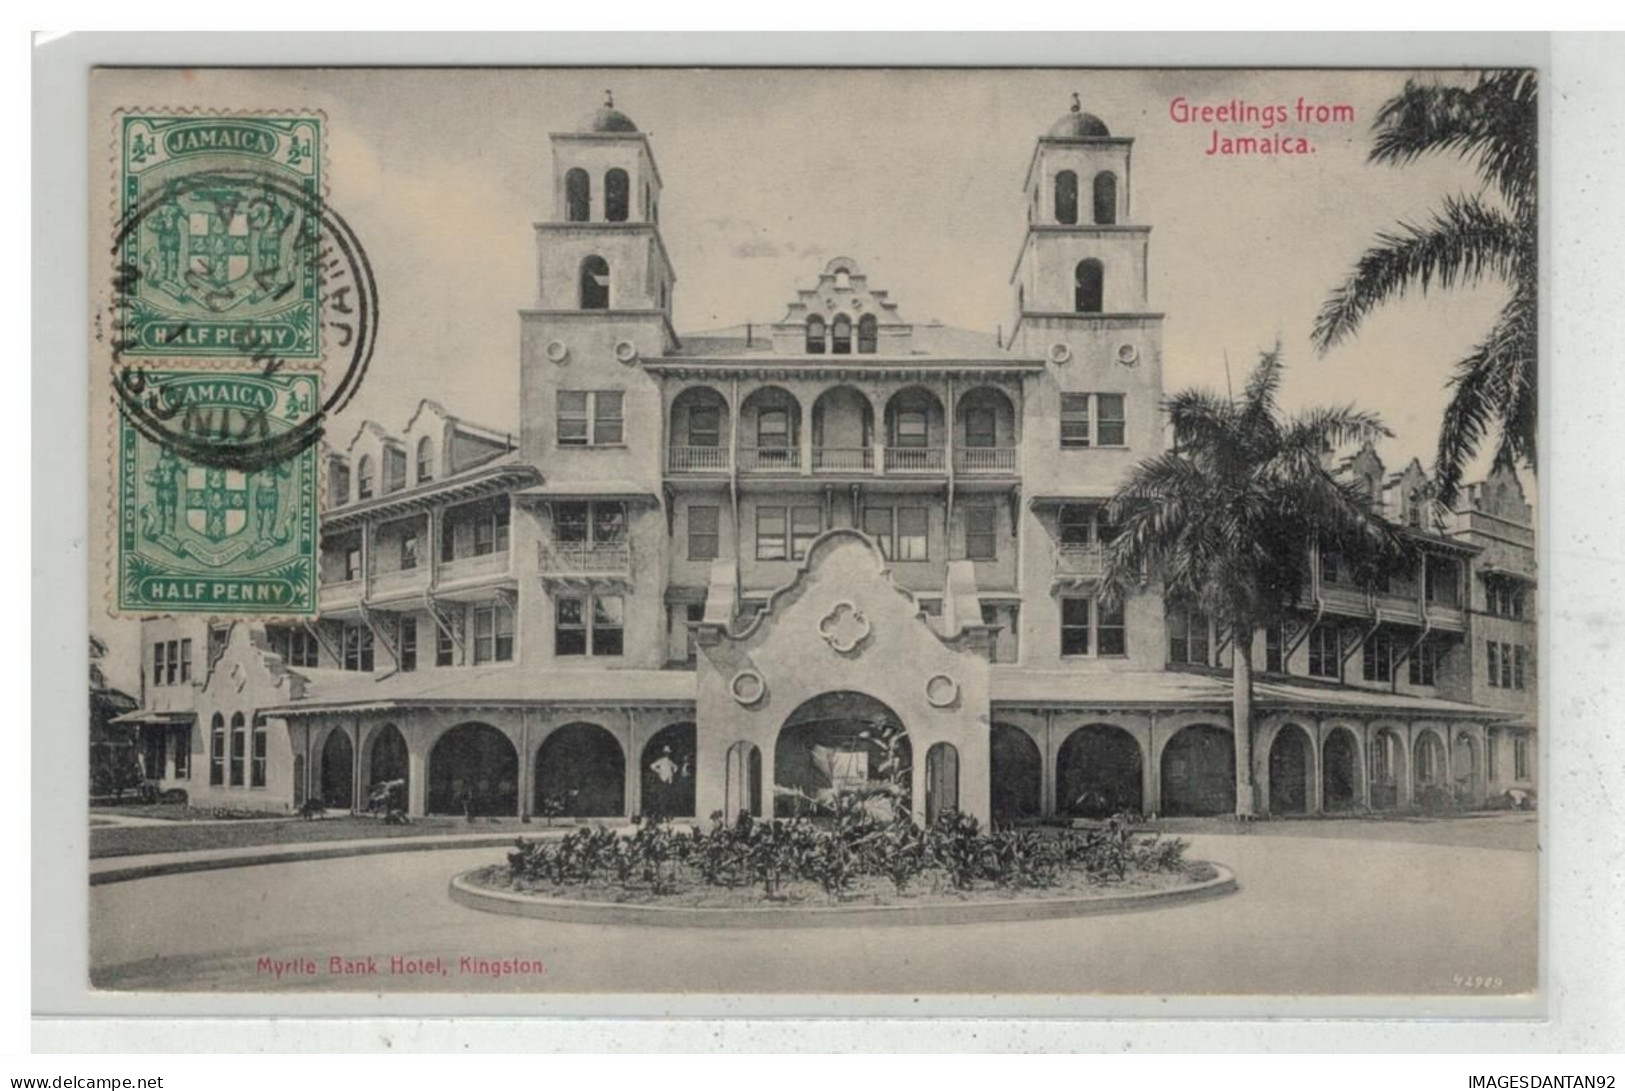 JAMAIQUE JAMAICA #17854 GREETINGS FROM MYRTIE BANK HOTEL KINGSTON - Jamaica